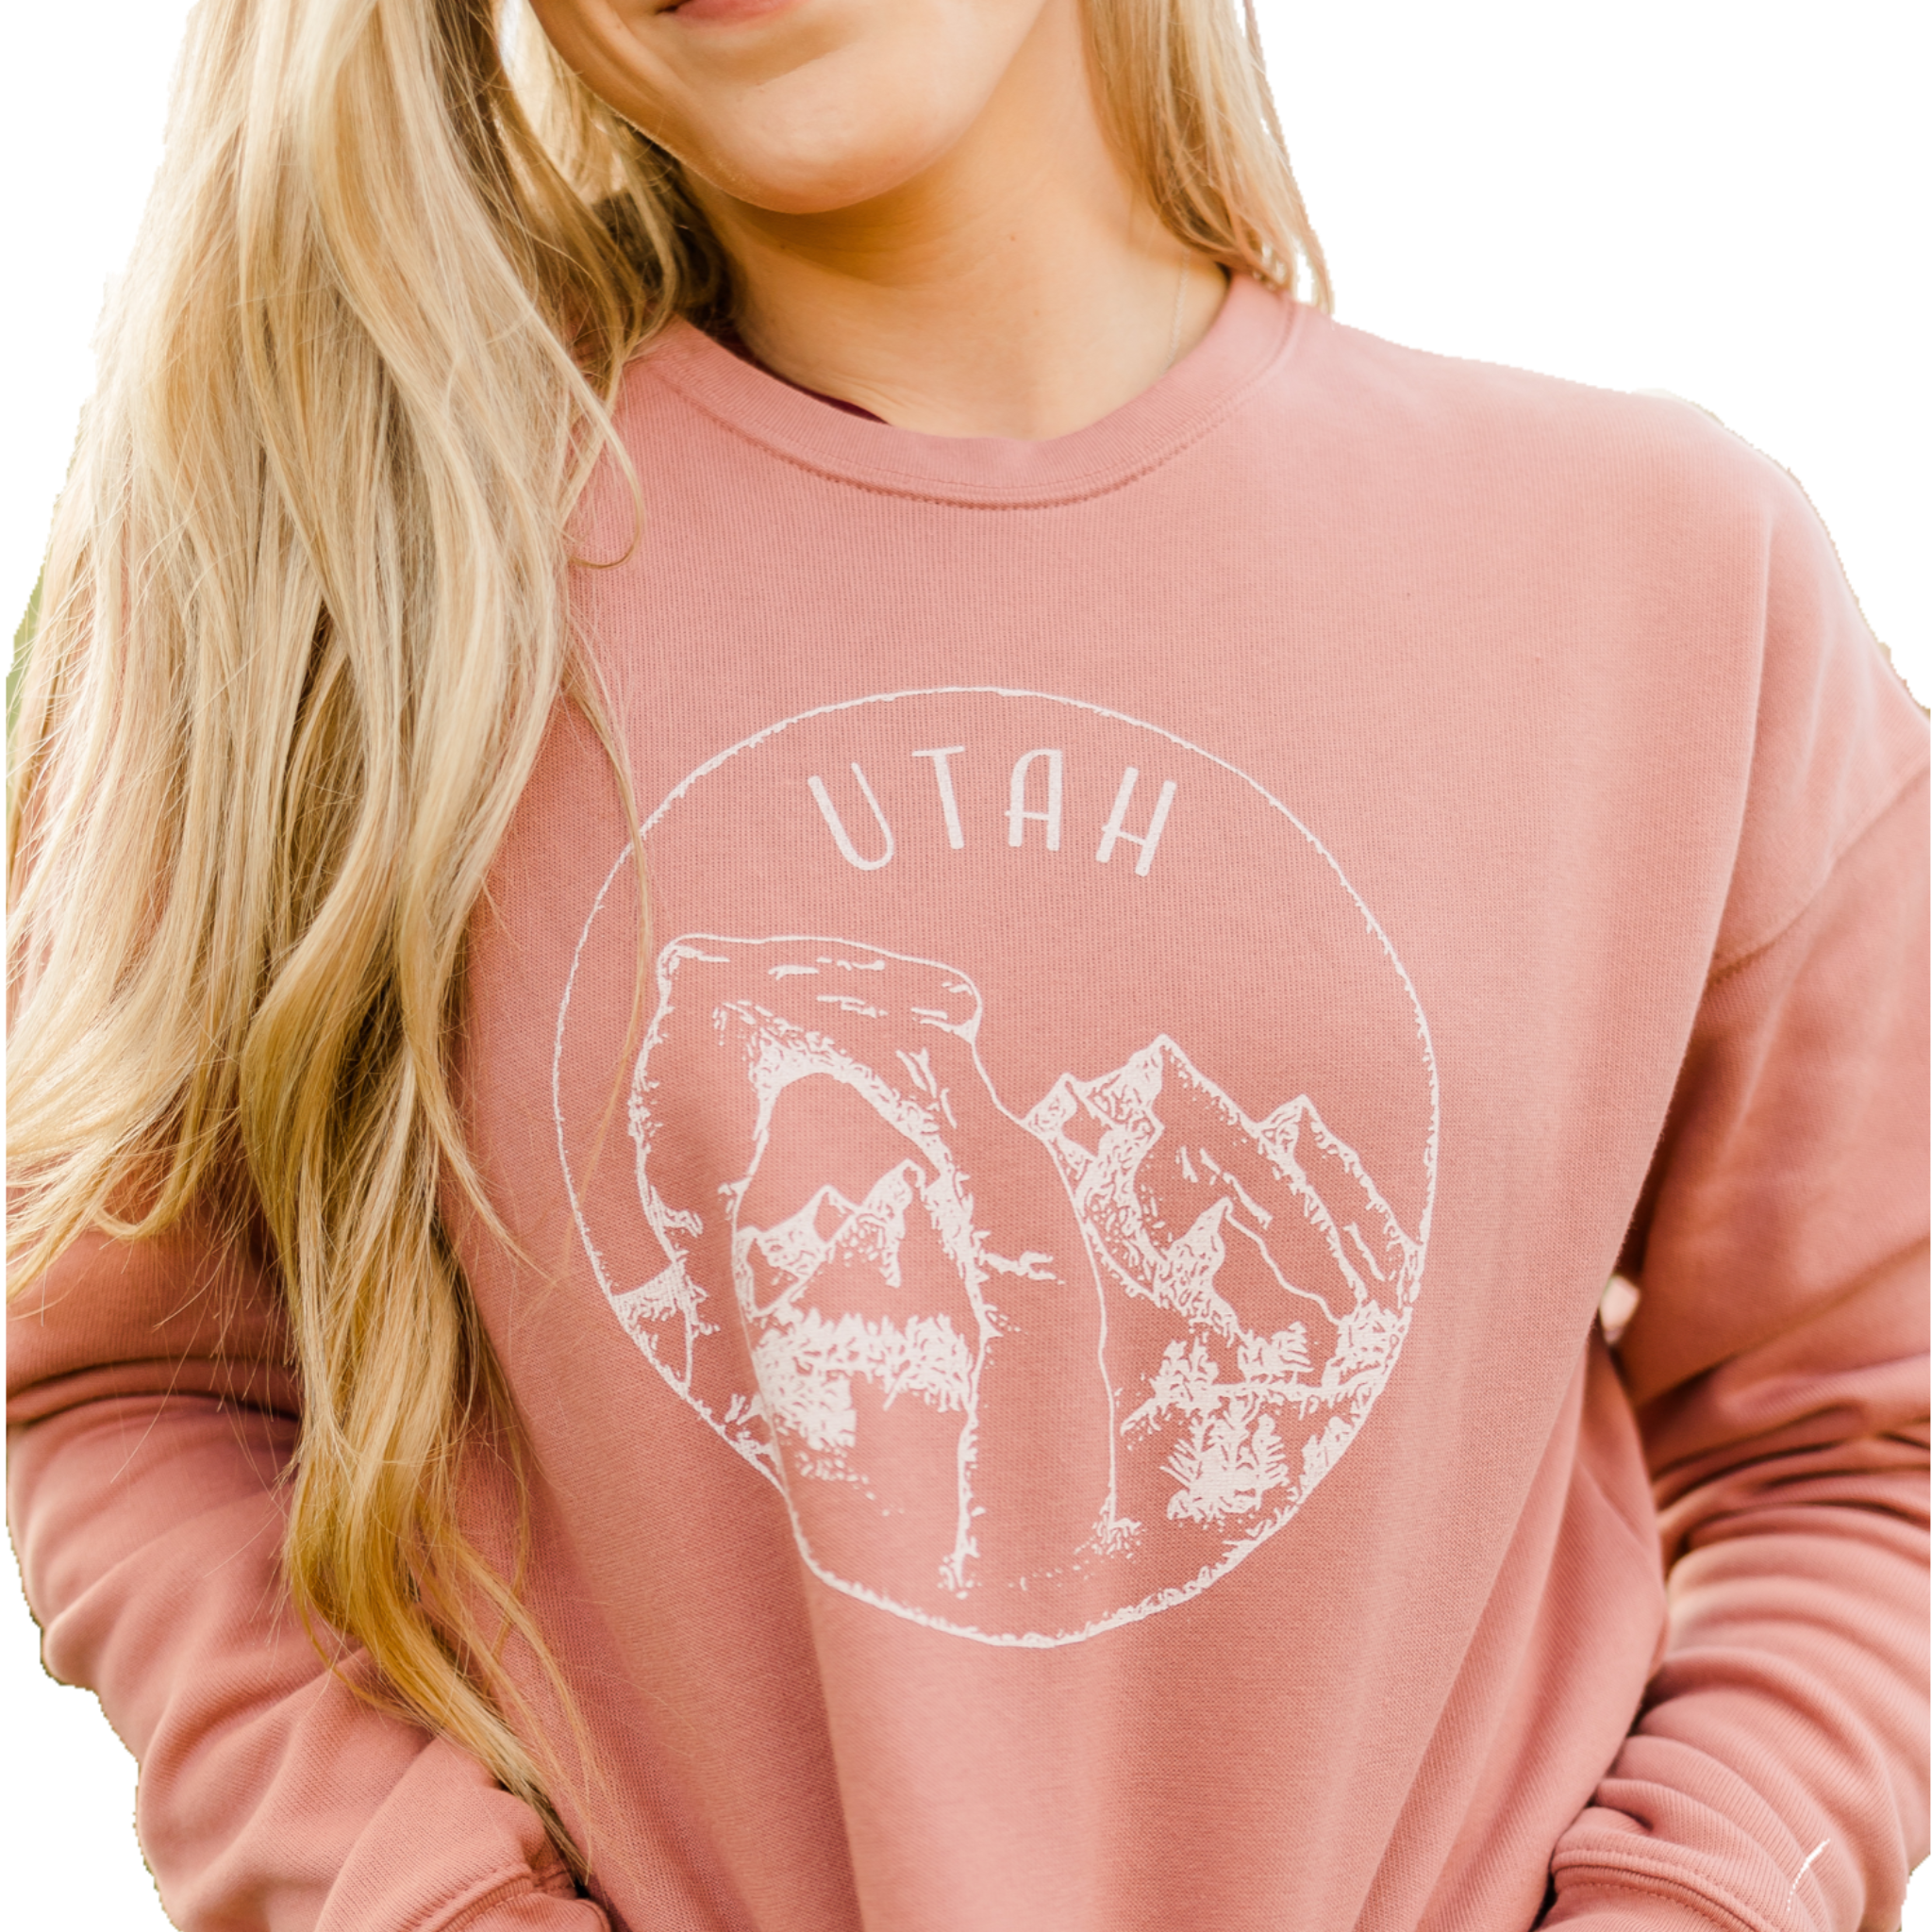 Utah Sweatshirt - Dusty Rose -Unisex - Shop Back Home